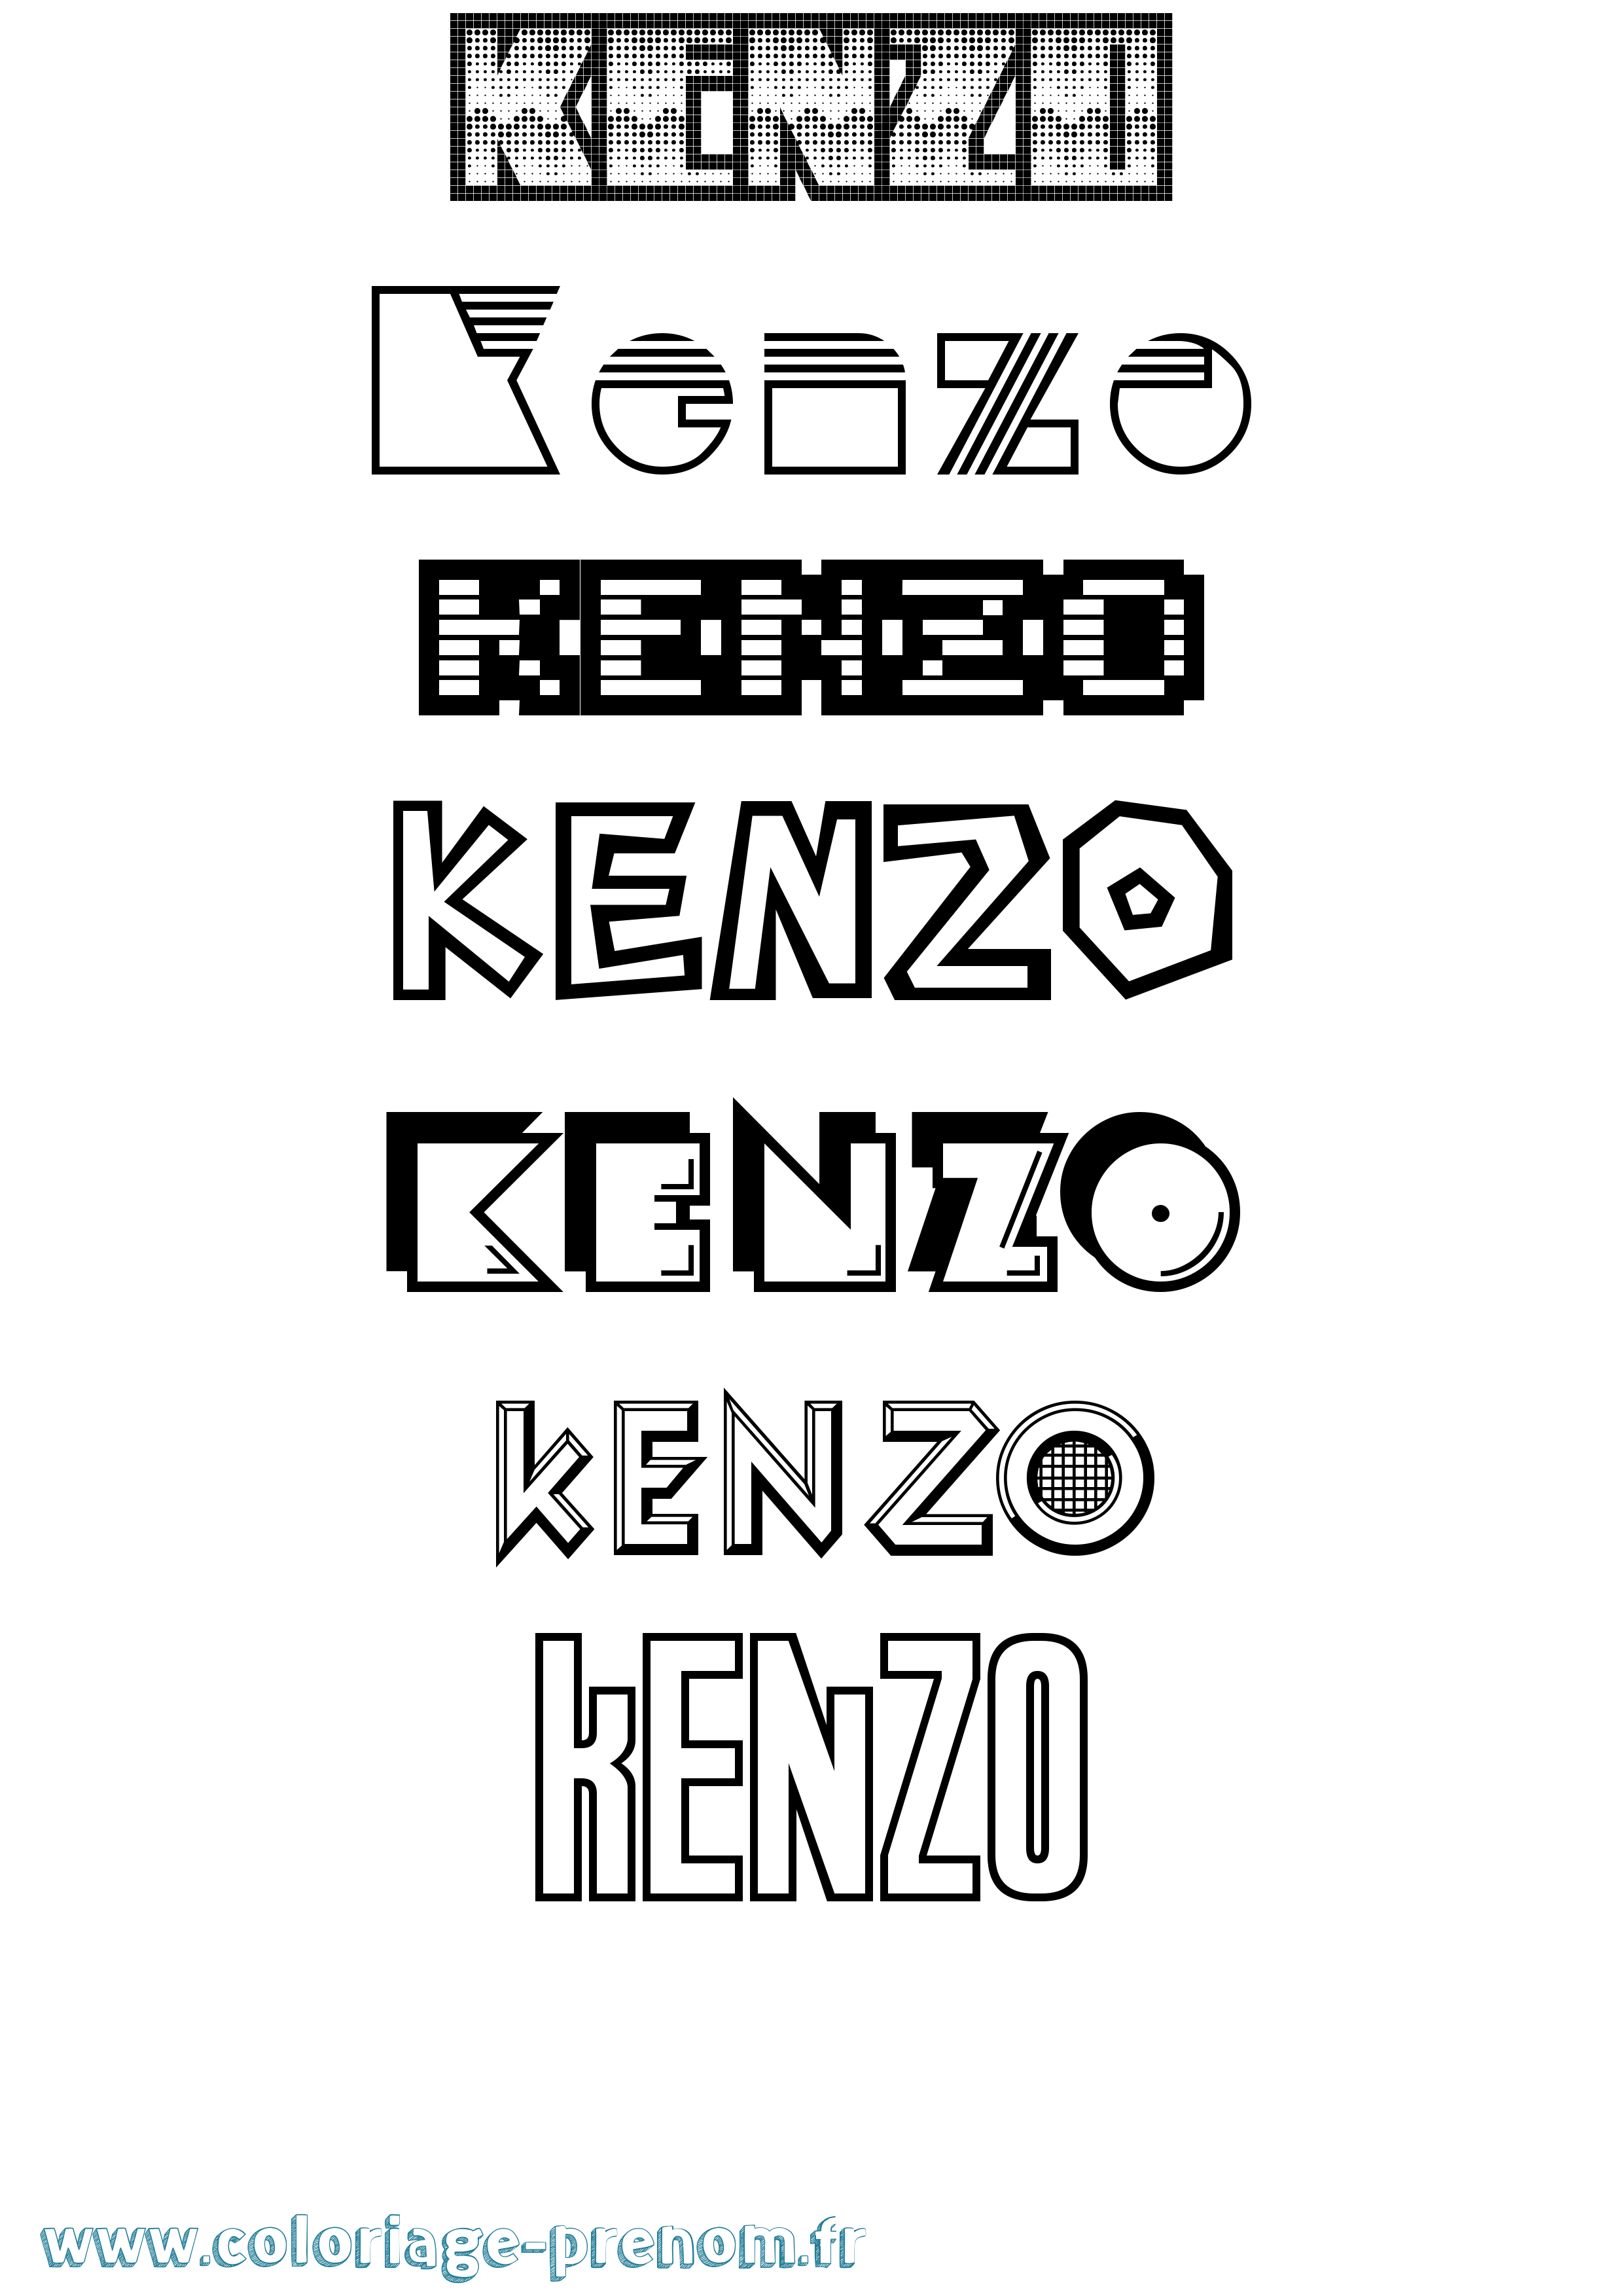 Coloriage prénom Kenzo